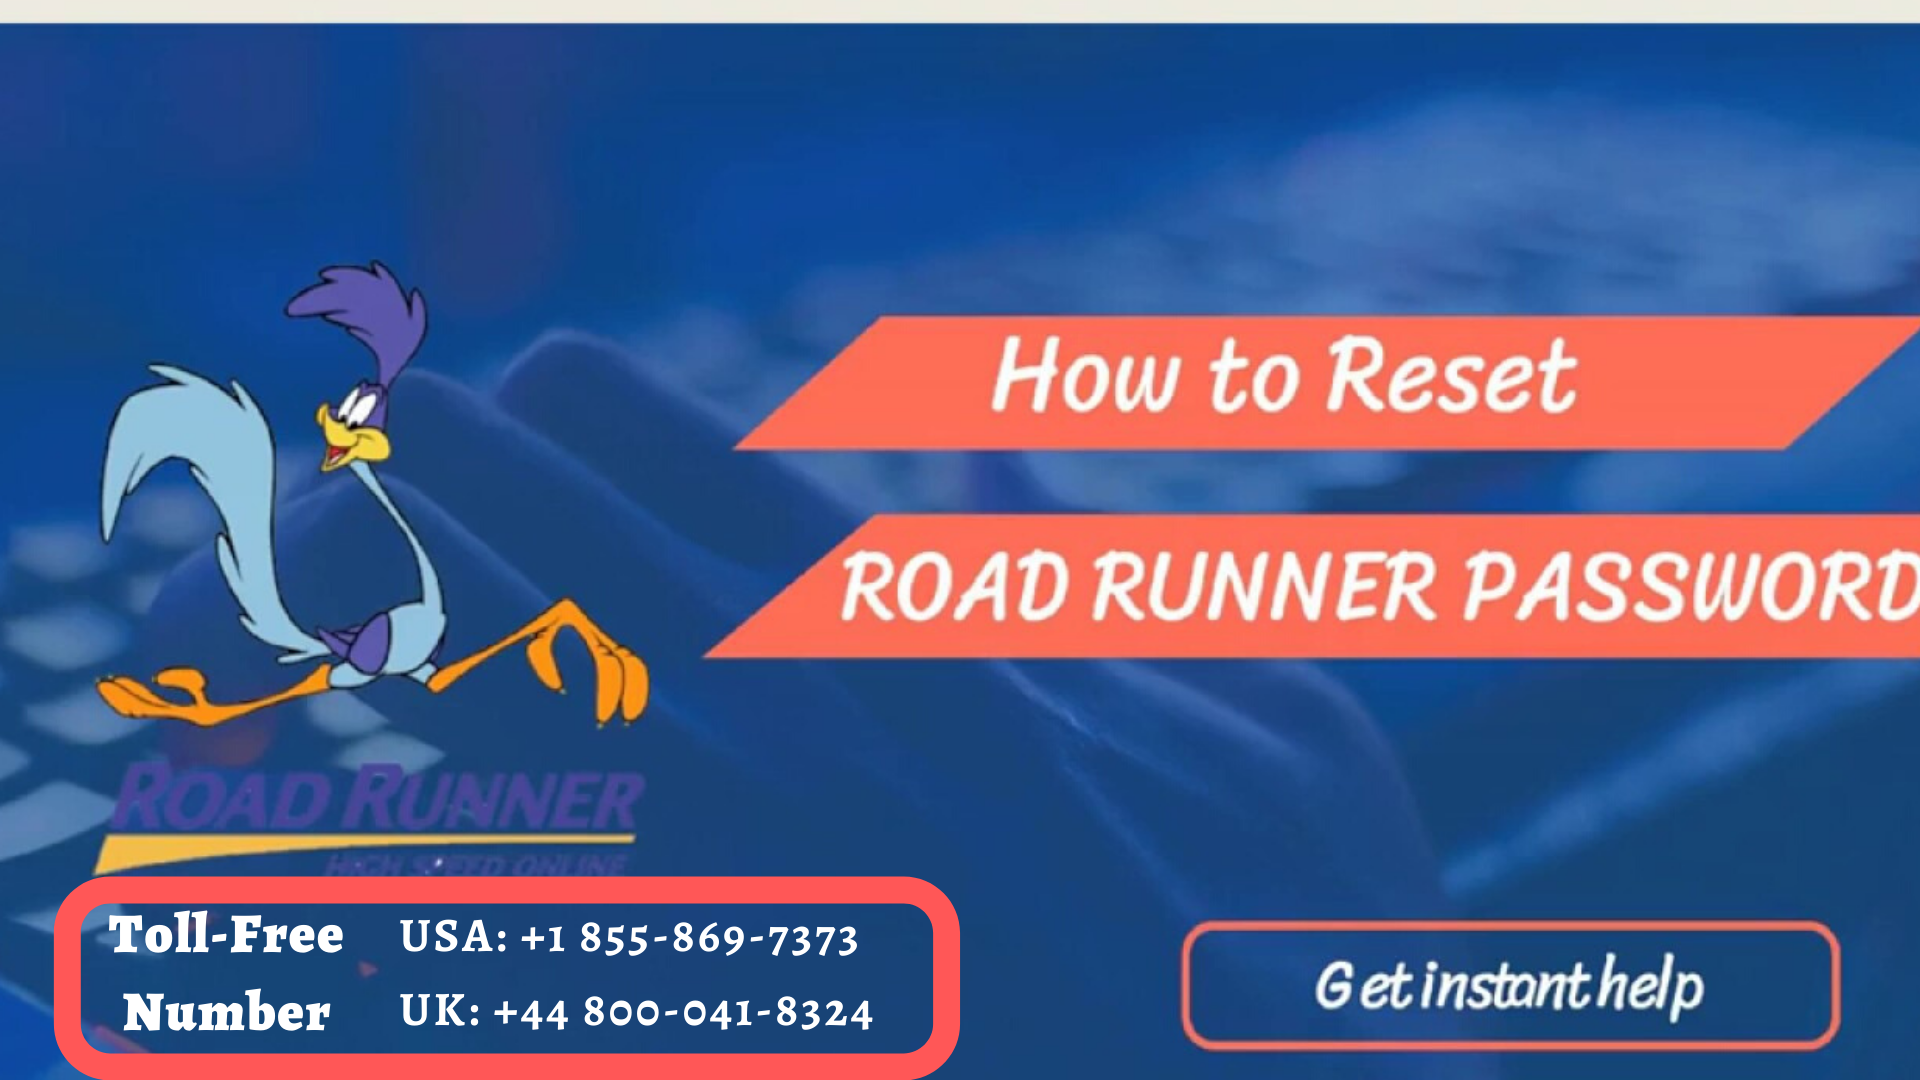 road runner webmail